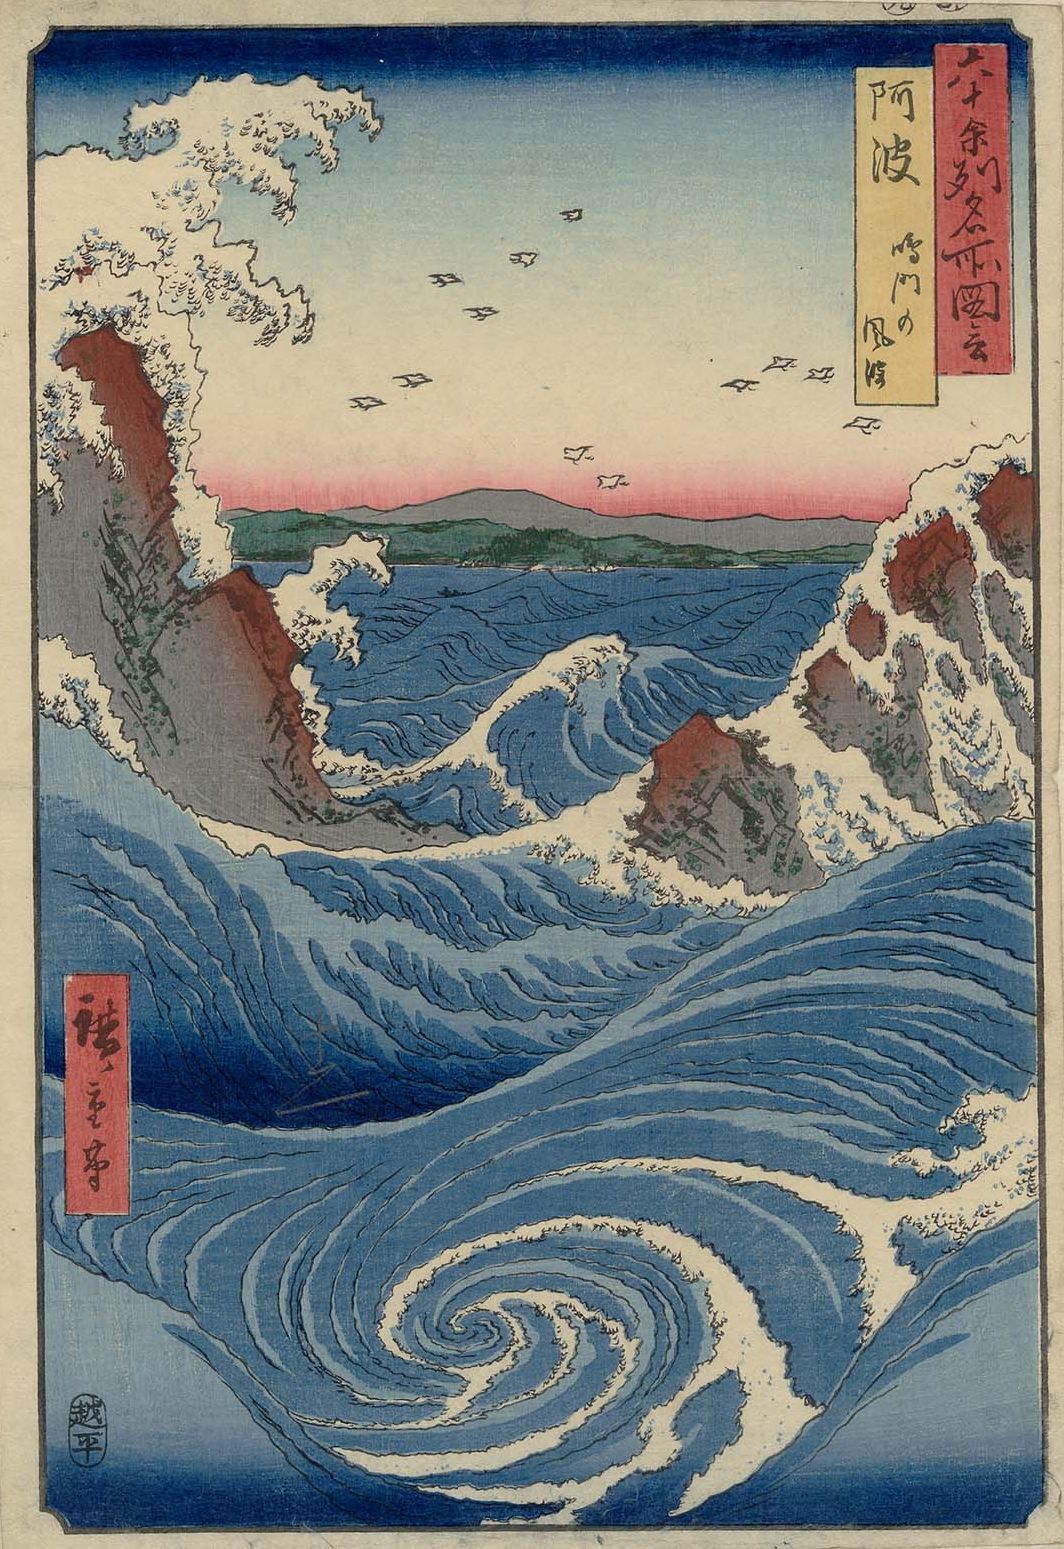 Naruto no fūha (Wir wodny w Naruto) by  Hiroshige - 1856 - 35,6 × 24,4 cm 